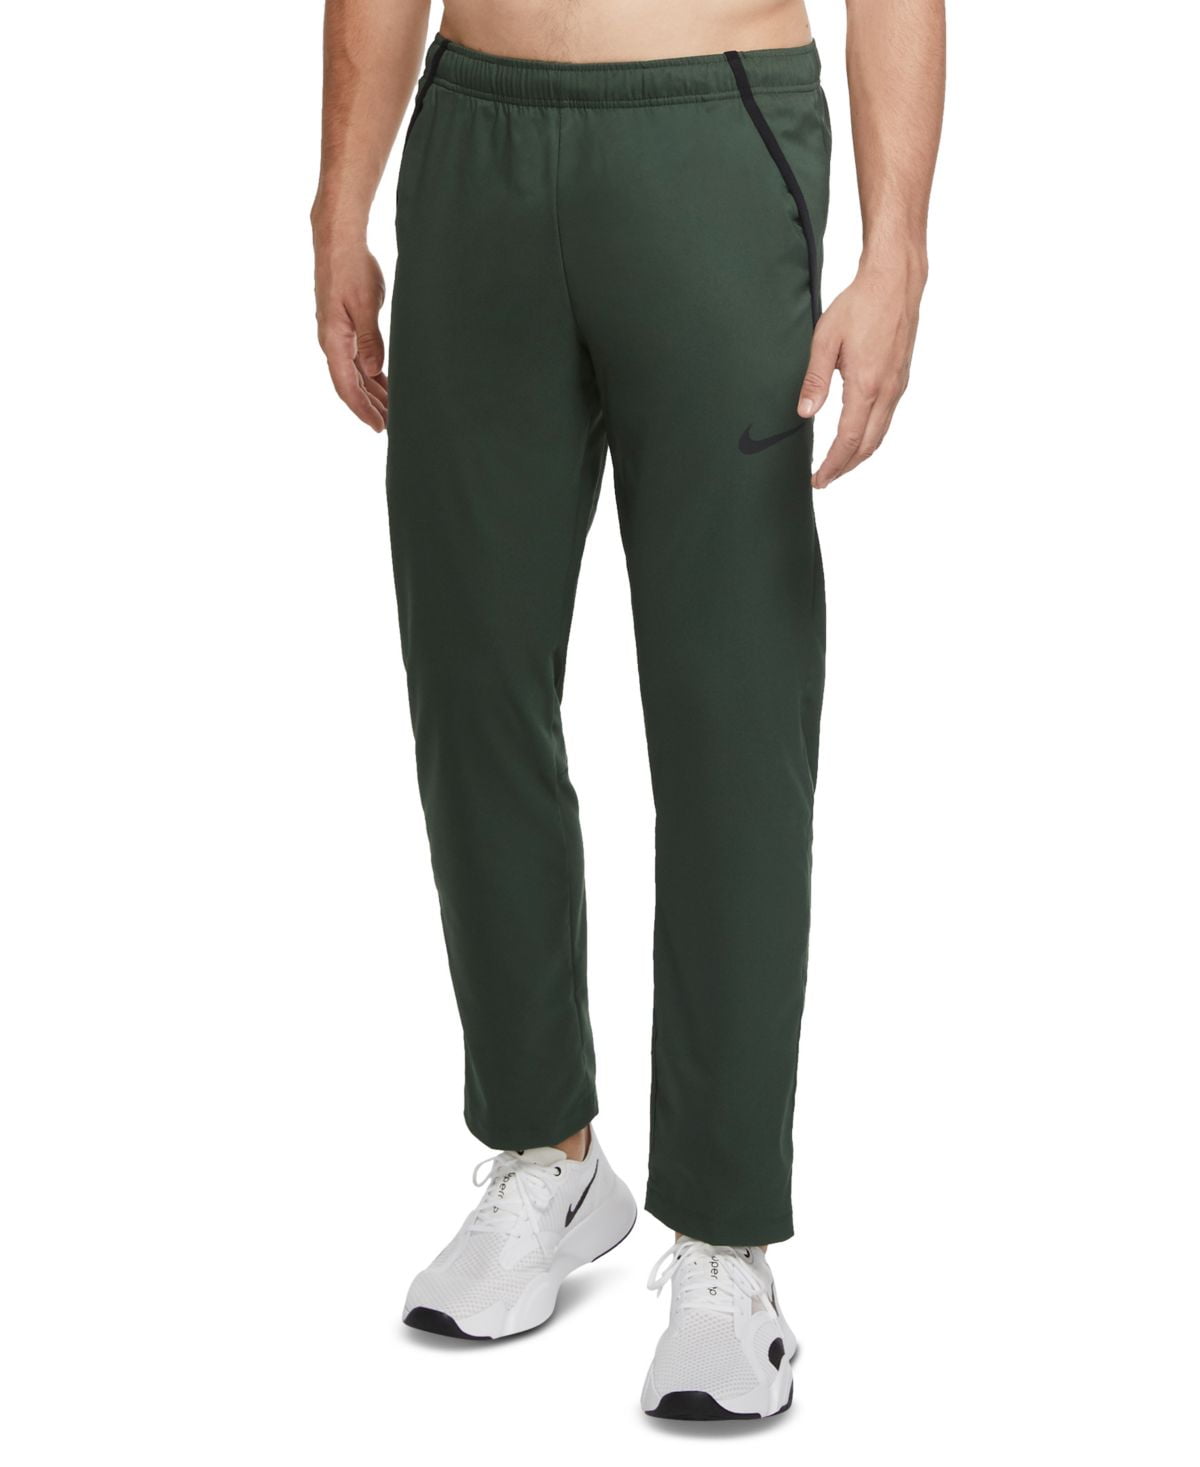 Nike Dri fit Training Pants - Walmart.com